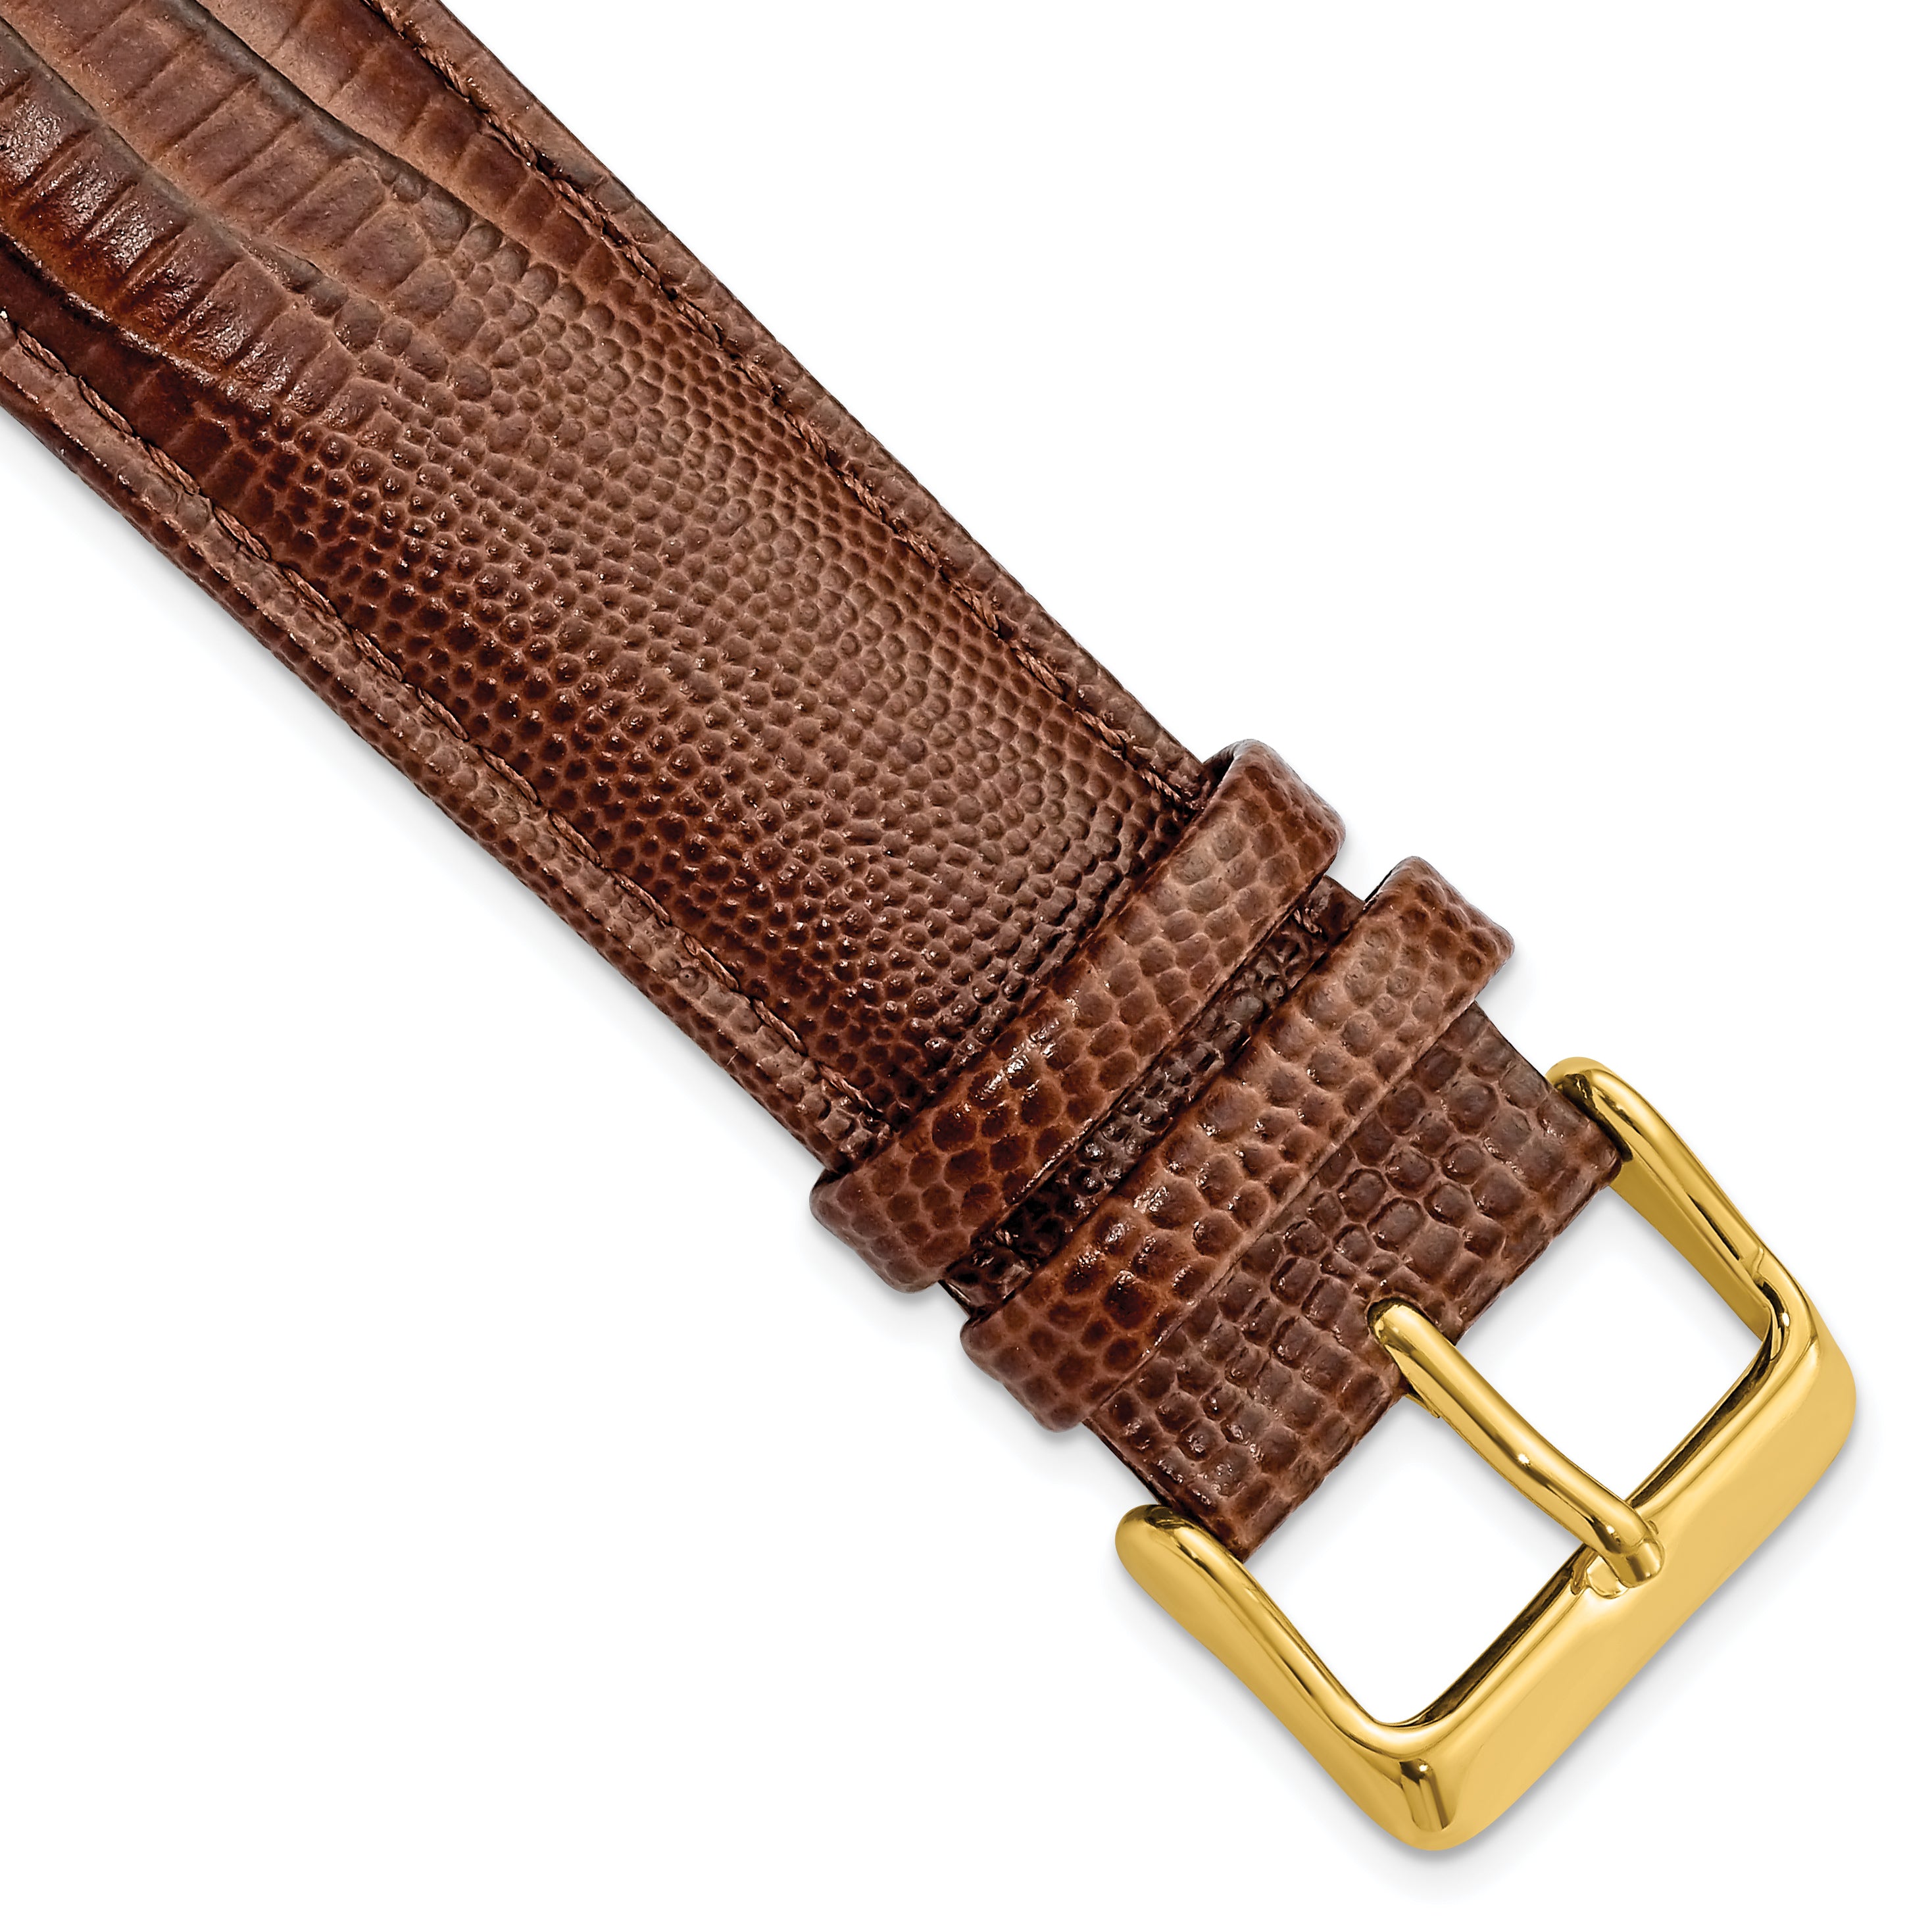 DeBeer 22mm Havana Teju Liz Grain Leather with Gold-tone Buckle 7.5 inch Watch Band